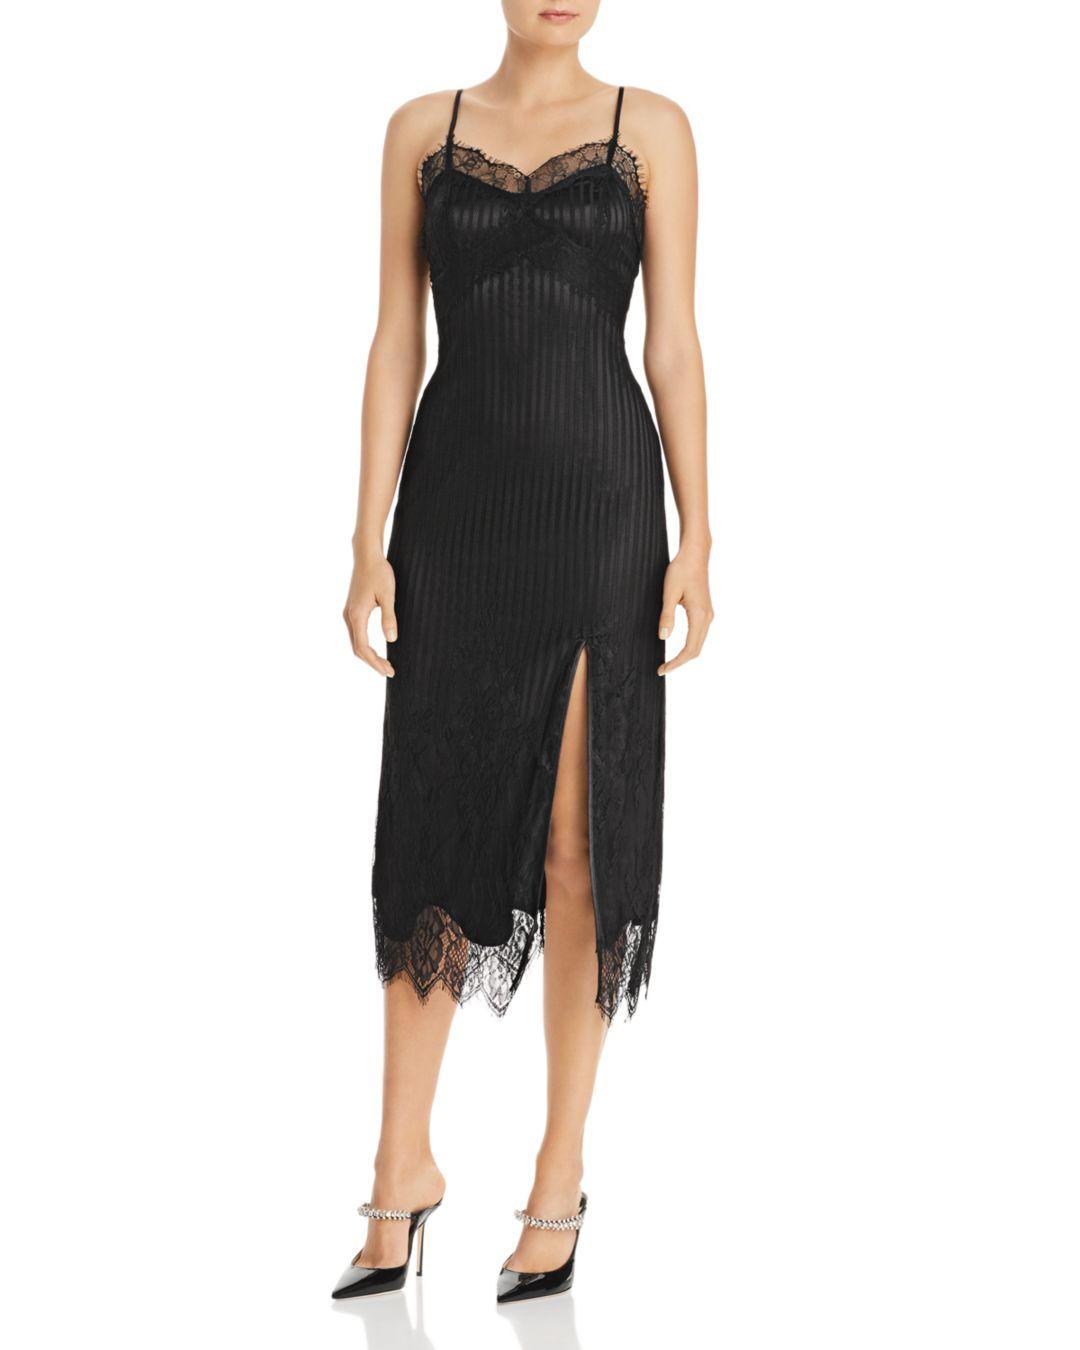 Donna Mizani Teddy Lace - Trimmed Dress in Black - Lyst